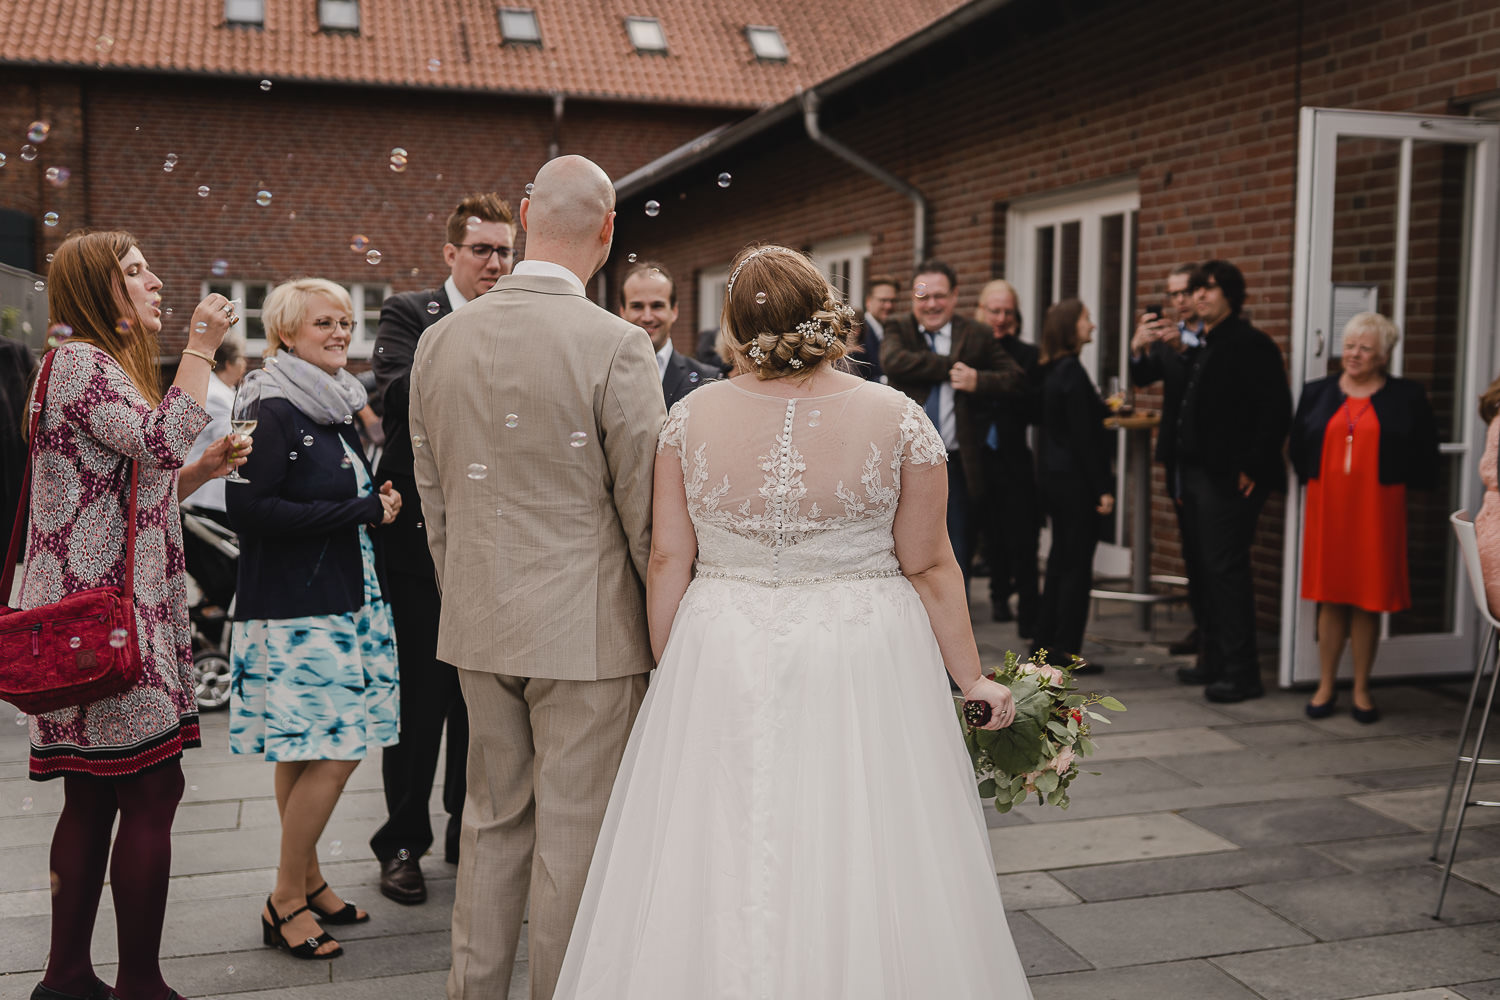 Hochzeitsfotograf NRW